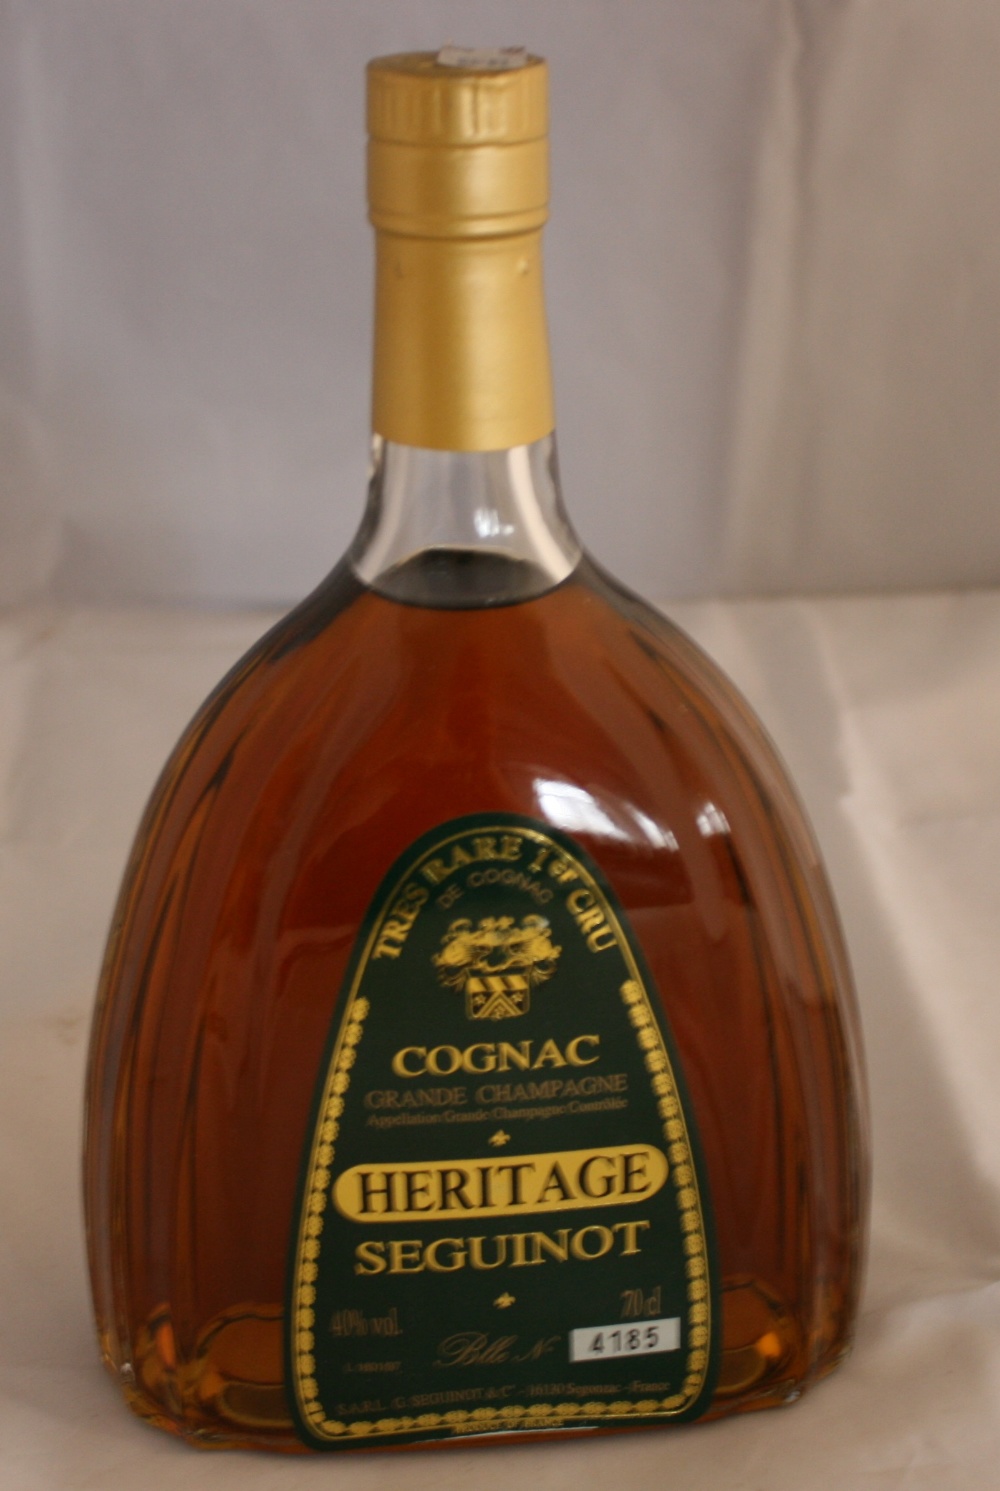 SEGUINOT - bottle of Heritage Grande Champagne Cognac Tres Rare 1er Cru No.4185, boxed (70cl/40%).